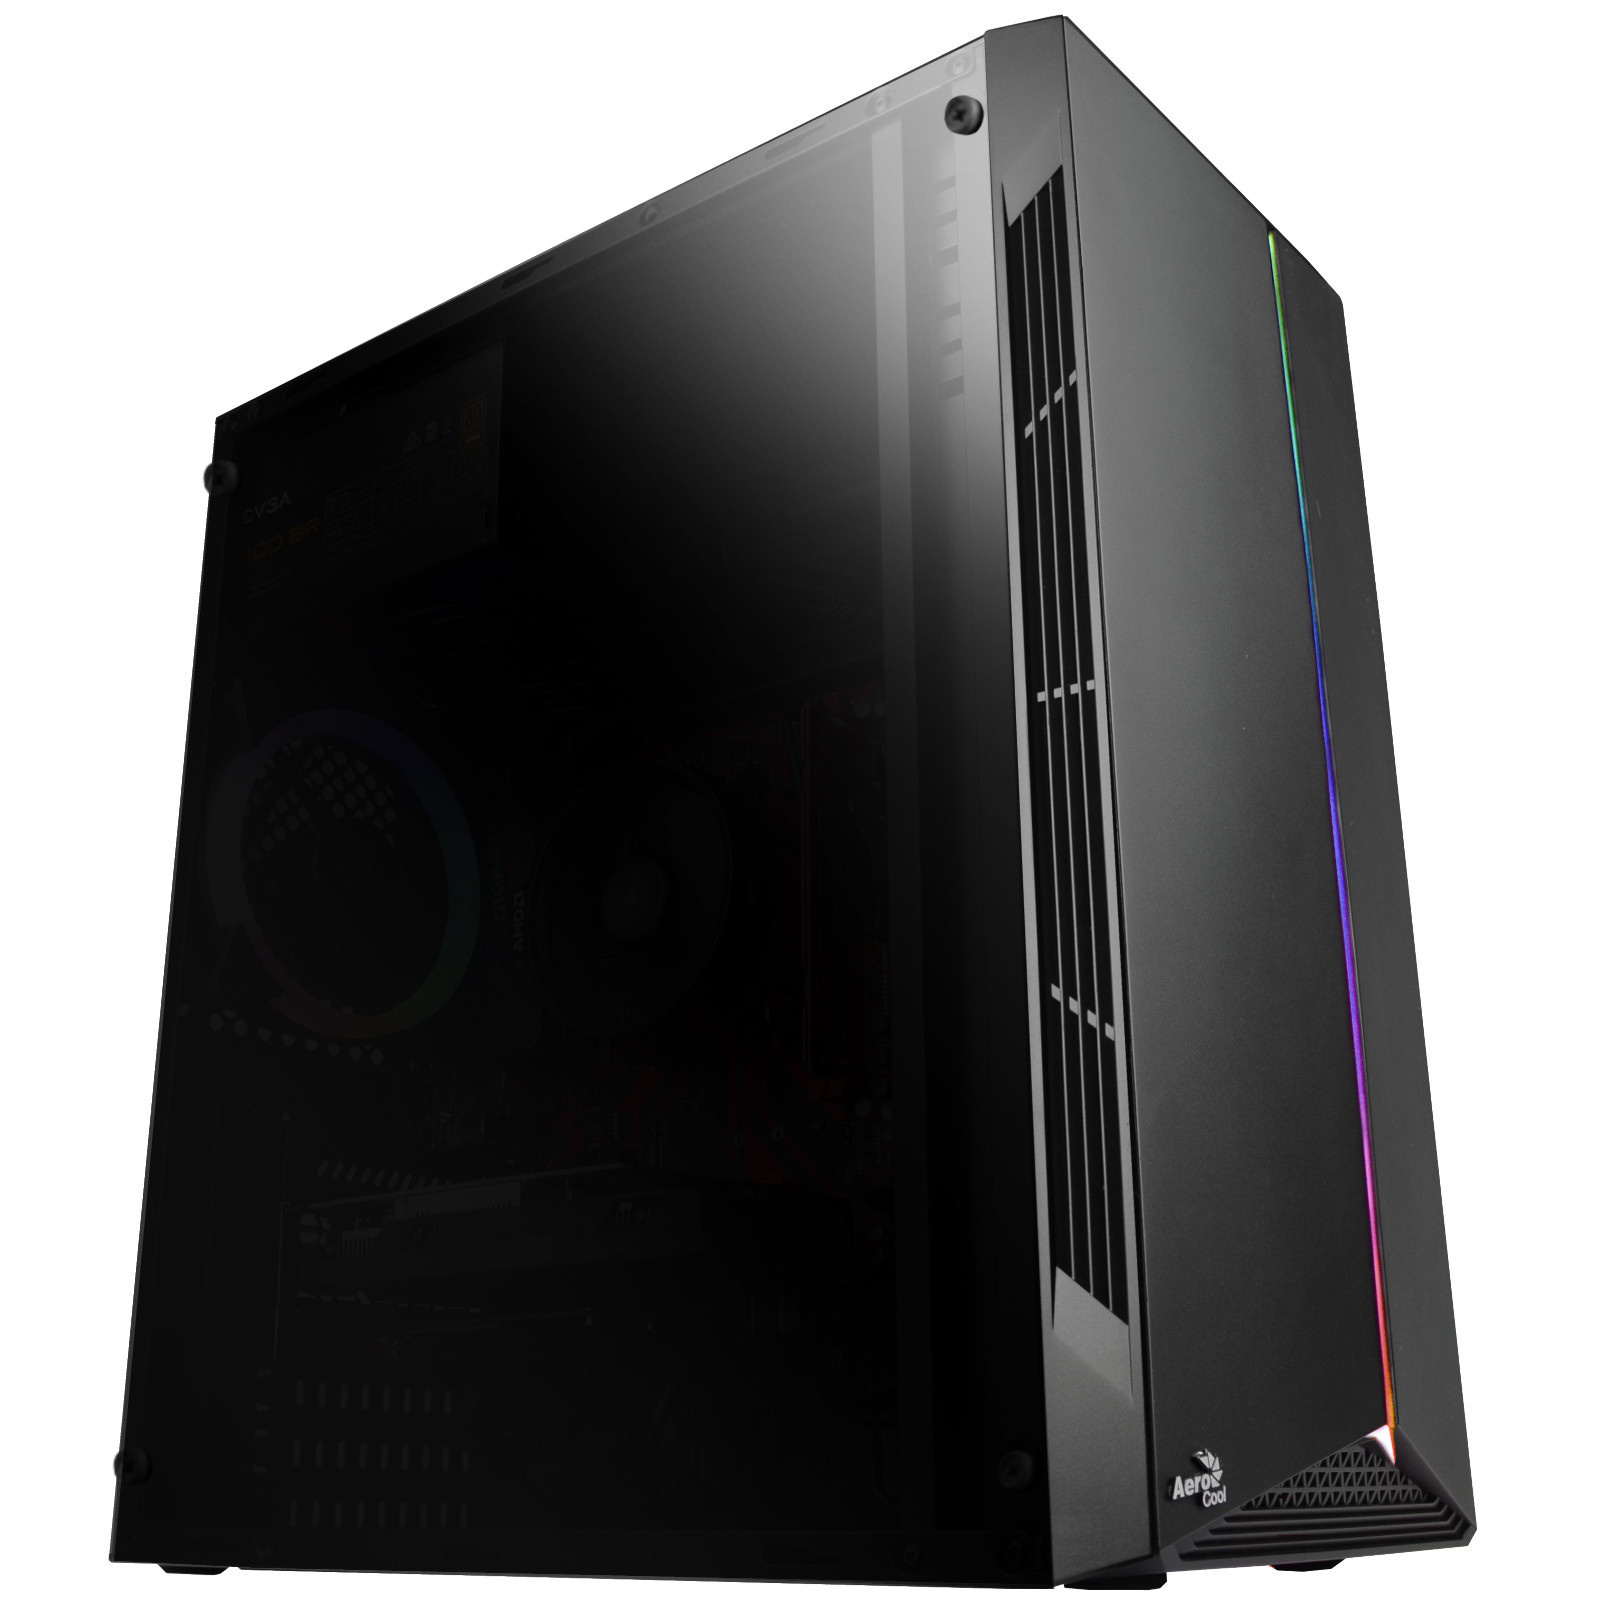 Buy the GGPC GTX 1650 SUPER Gaming PC AMD Ryzen 3 3200G 4 Core - 8GB RAM  -... ( WKSGGPC101023A ) online - PBTech.com/pacific